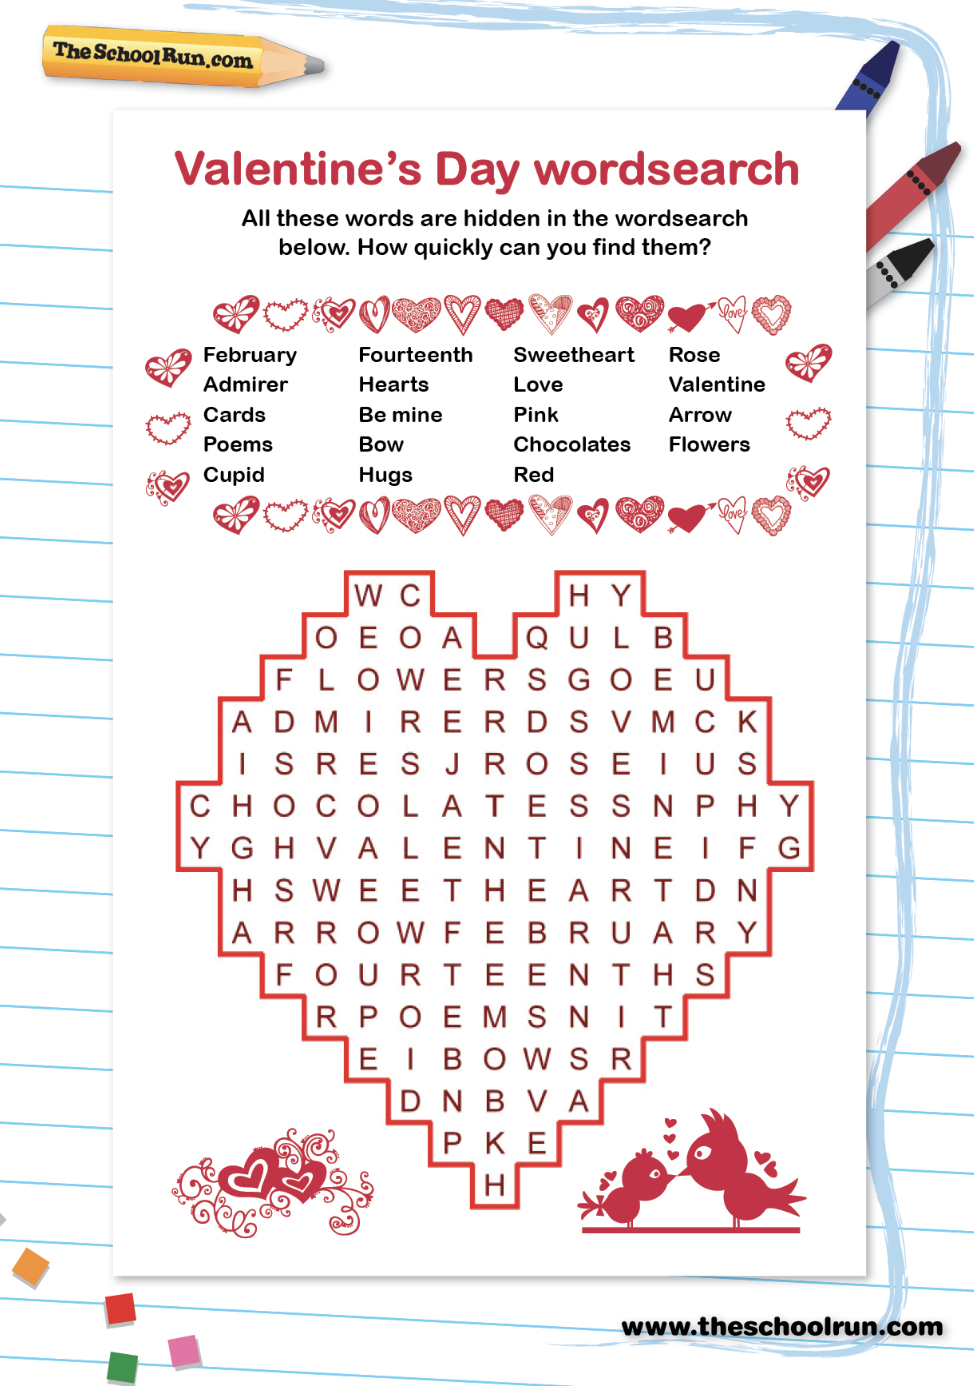 Valentines' wordsearch